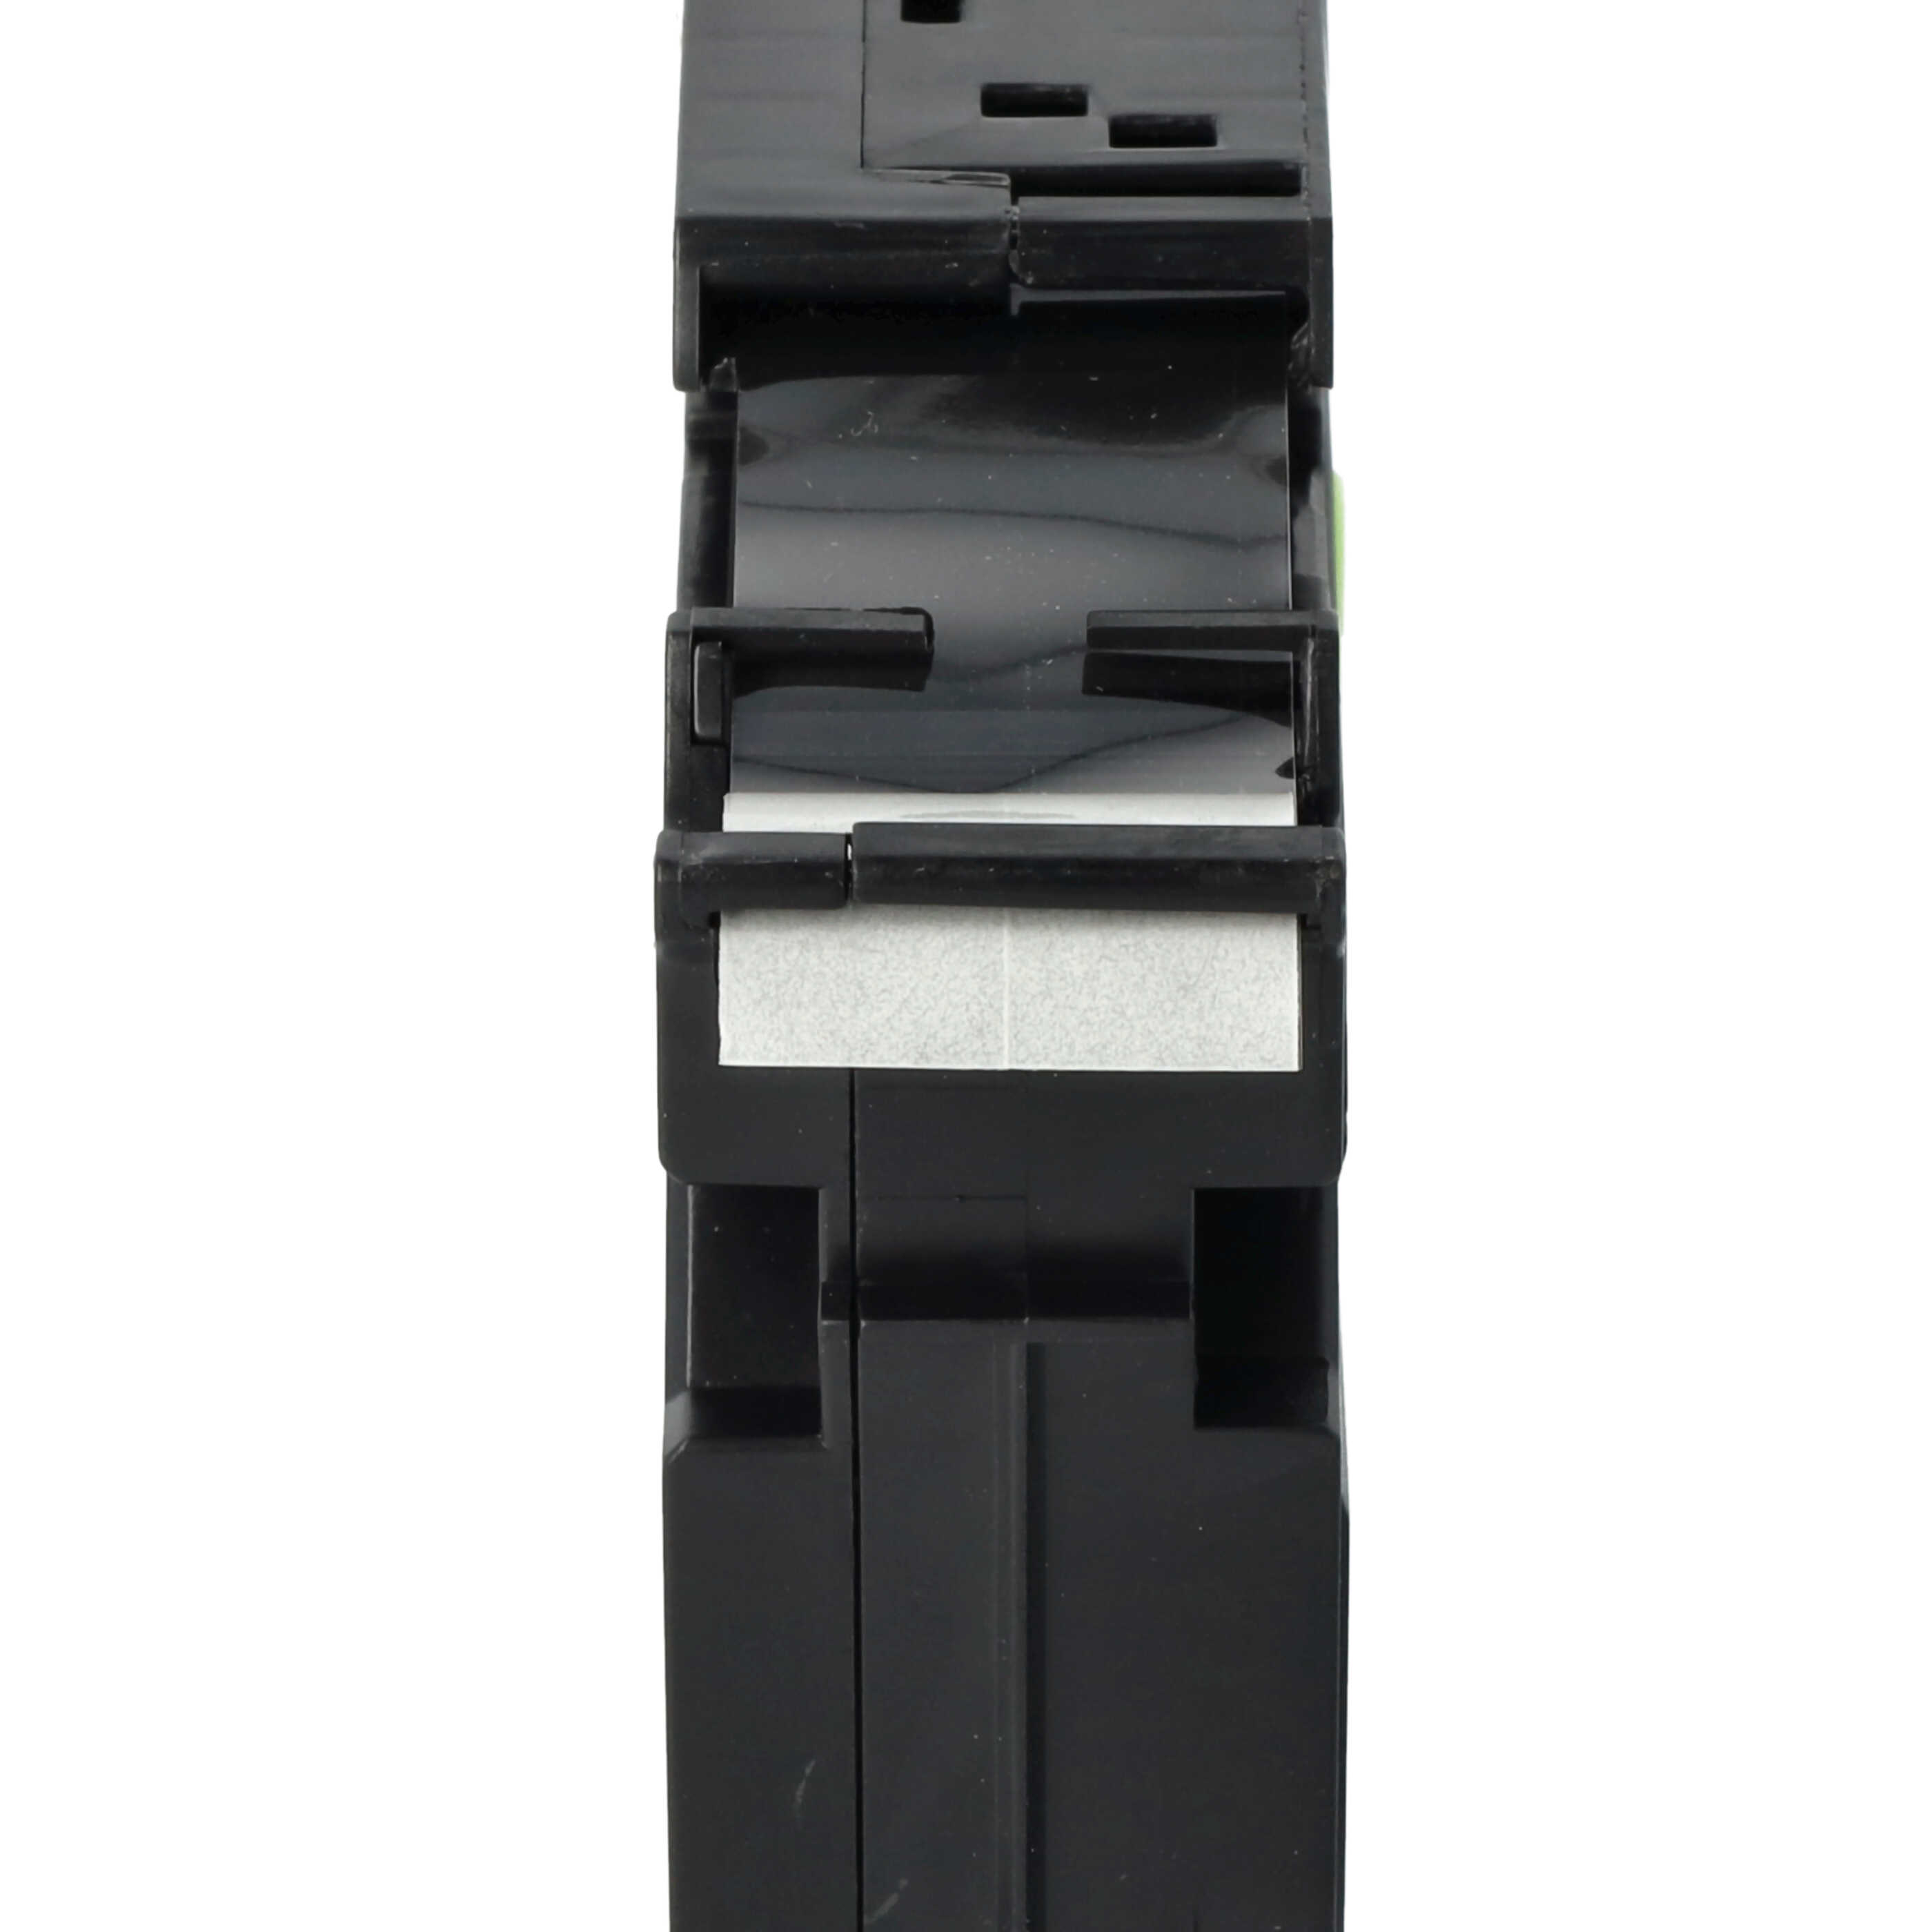 Casete cinta escritura reemplaza Brother TZ-FX141, TZE-FX141, TZFX141, TZeFX141 Negro su Transparente